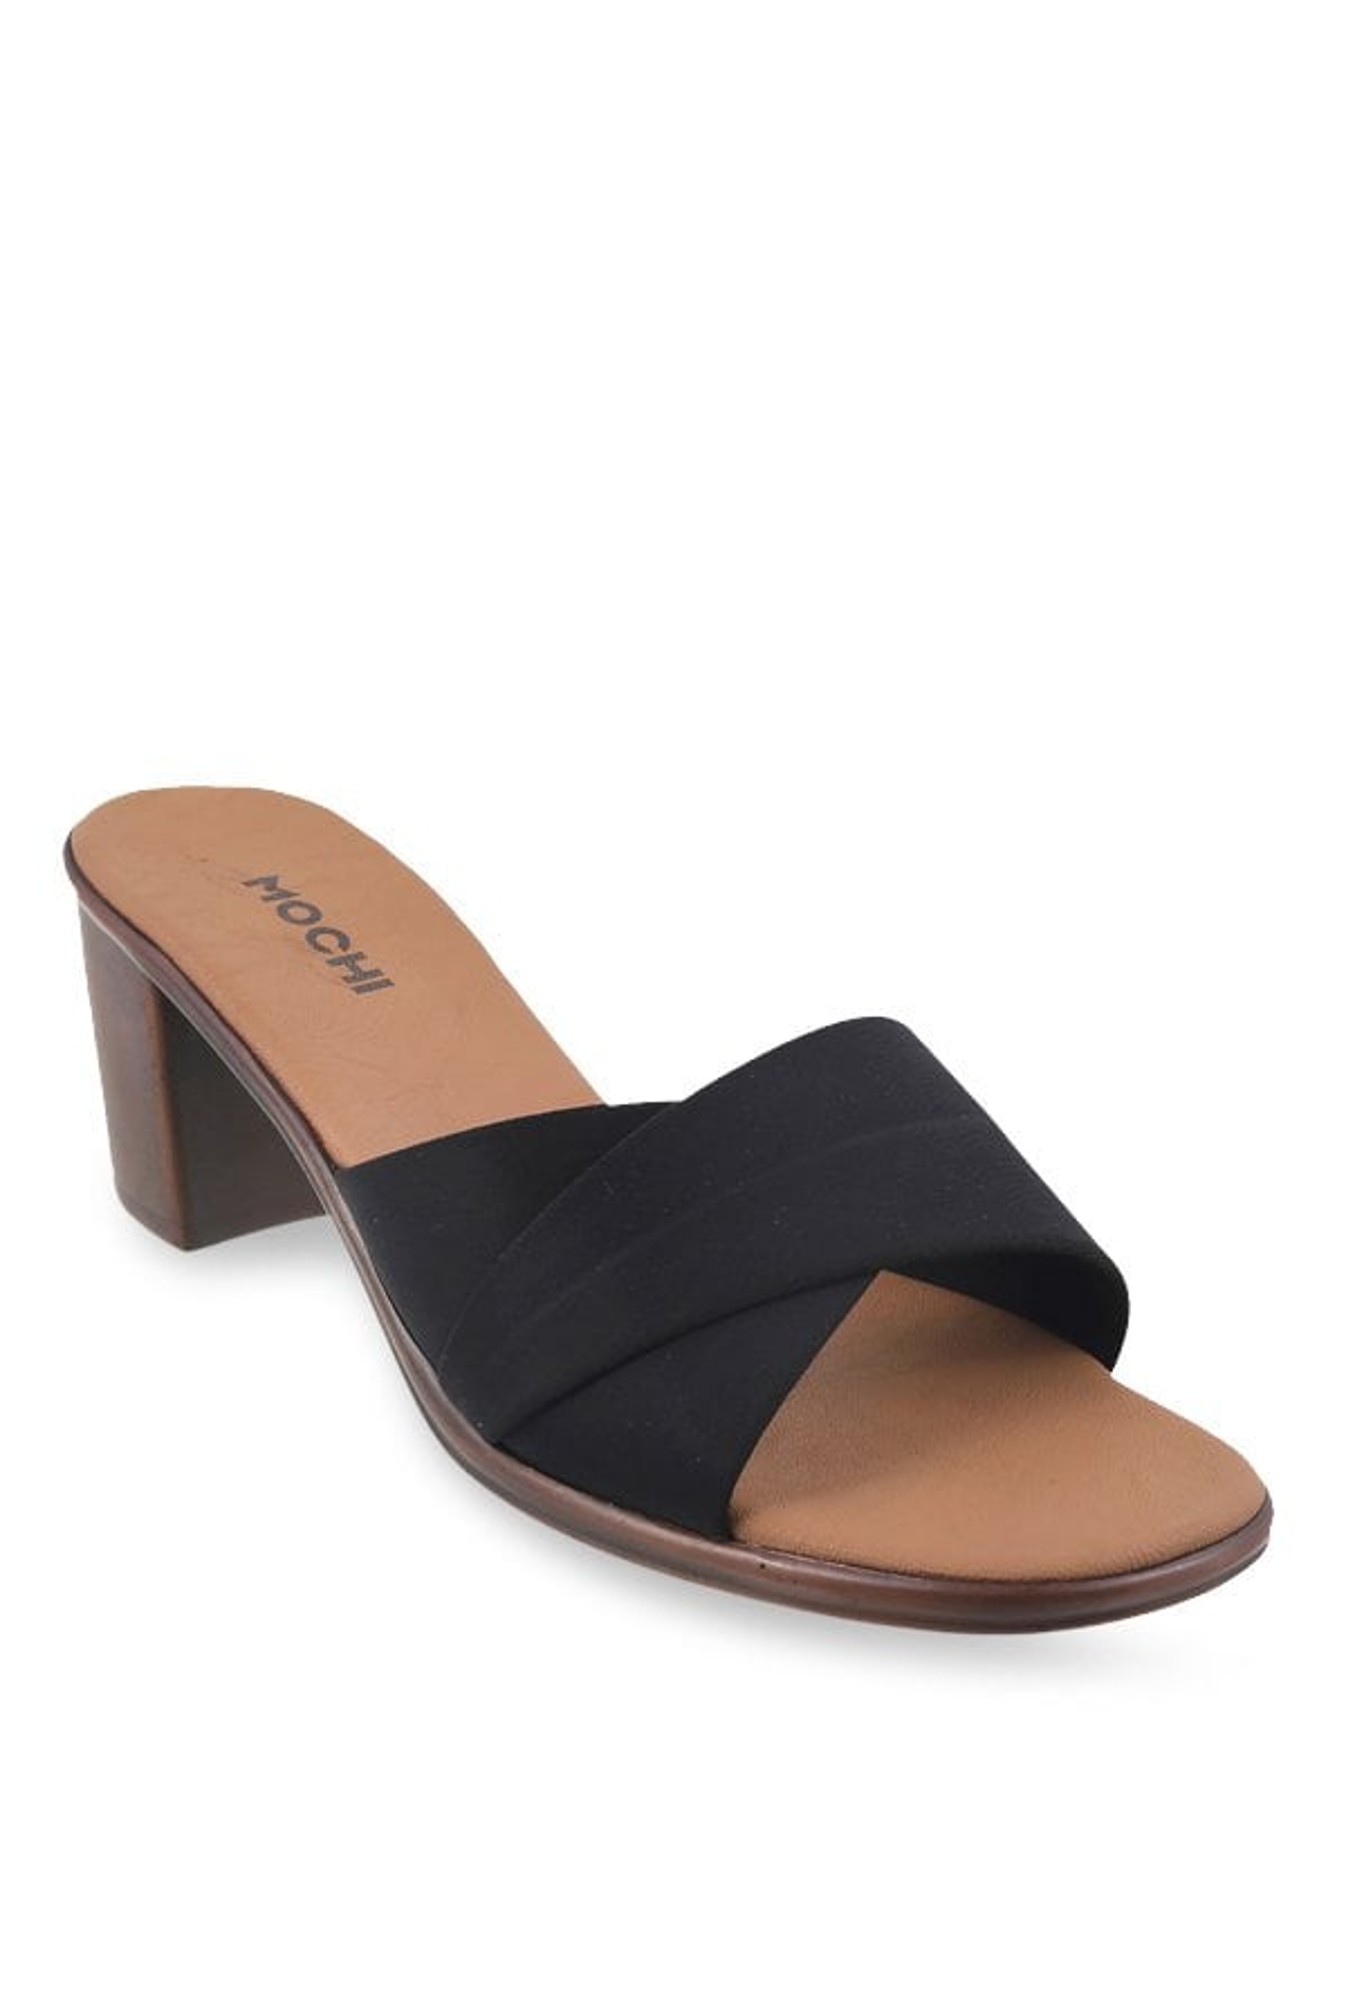 Buy Mochi Women Black Casual Sandals Online | SKU: 40-1948-11-36 – Mochi  Shoes-sgquangbinhtourist.com.vn